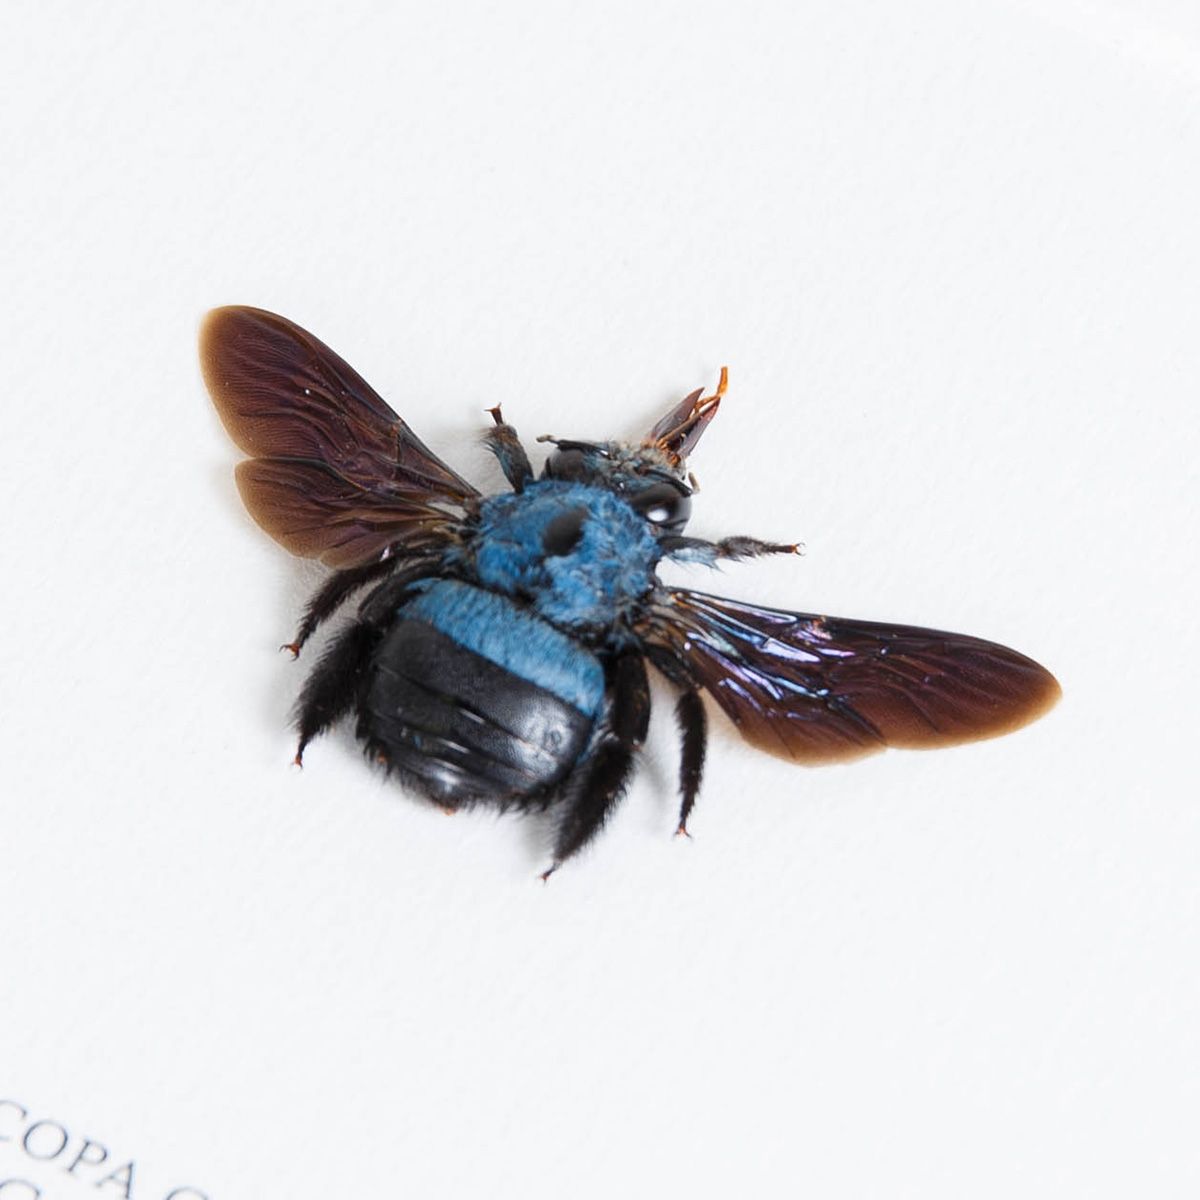 The Blue Carpenter Bee in Box Frame (Xylocopa caerulea)